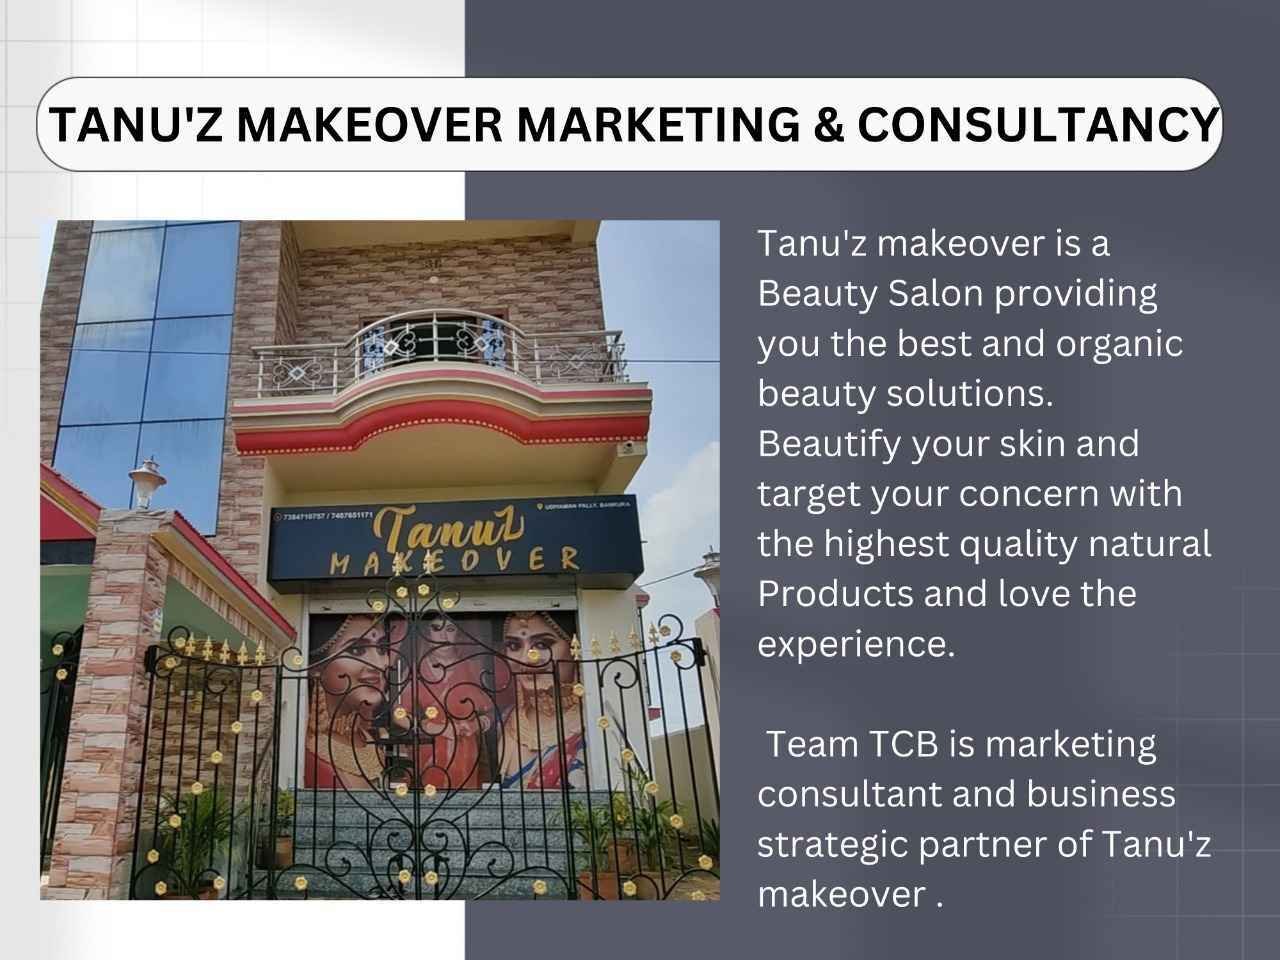 Tanu'z Makeover Marketing & Consultancy - Team TCB